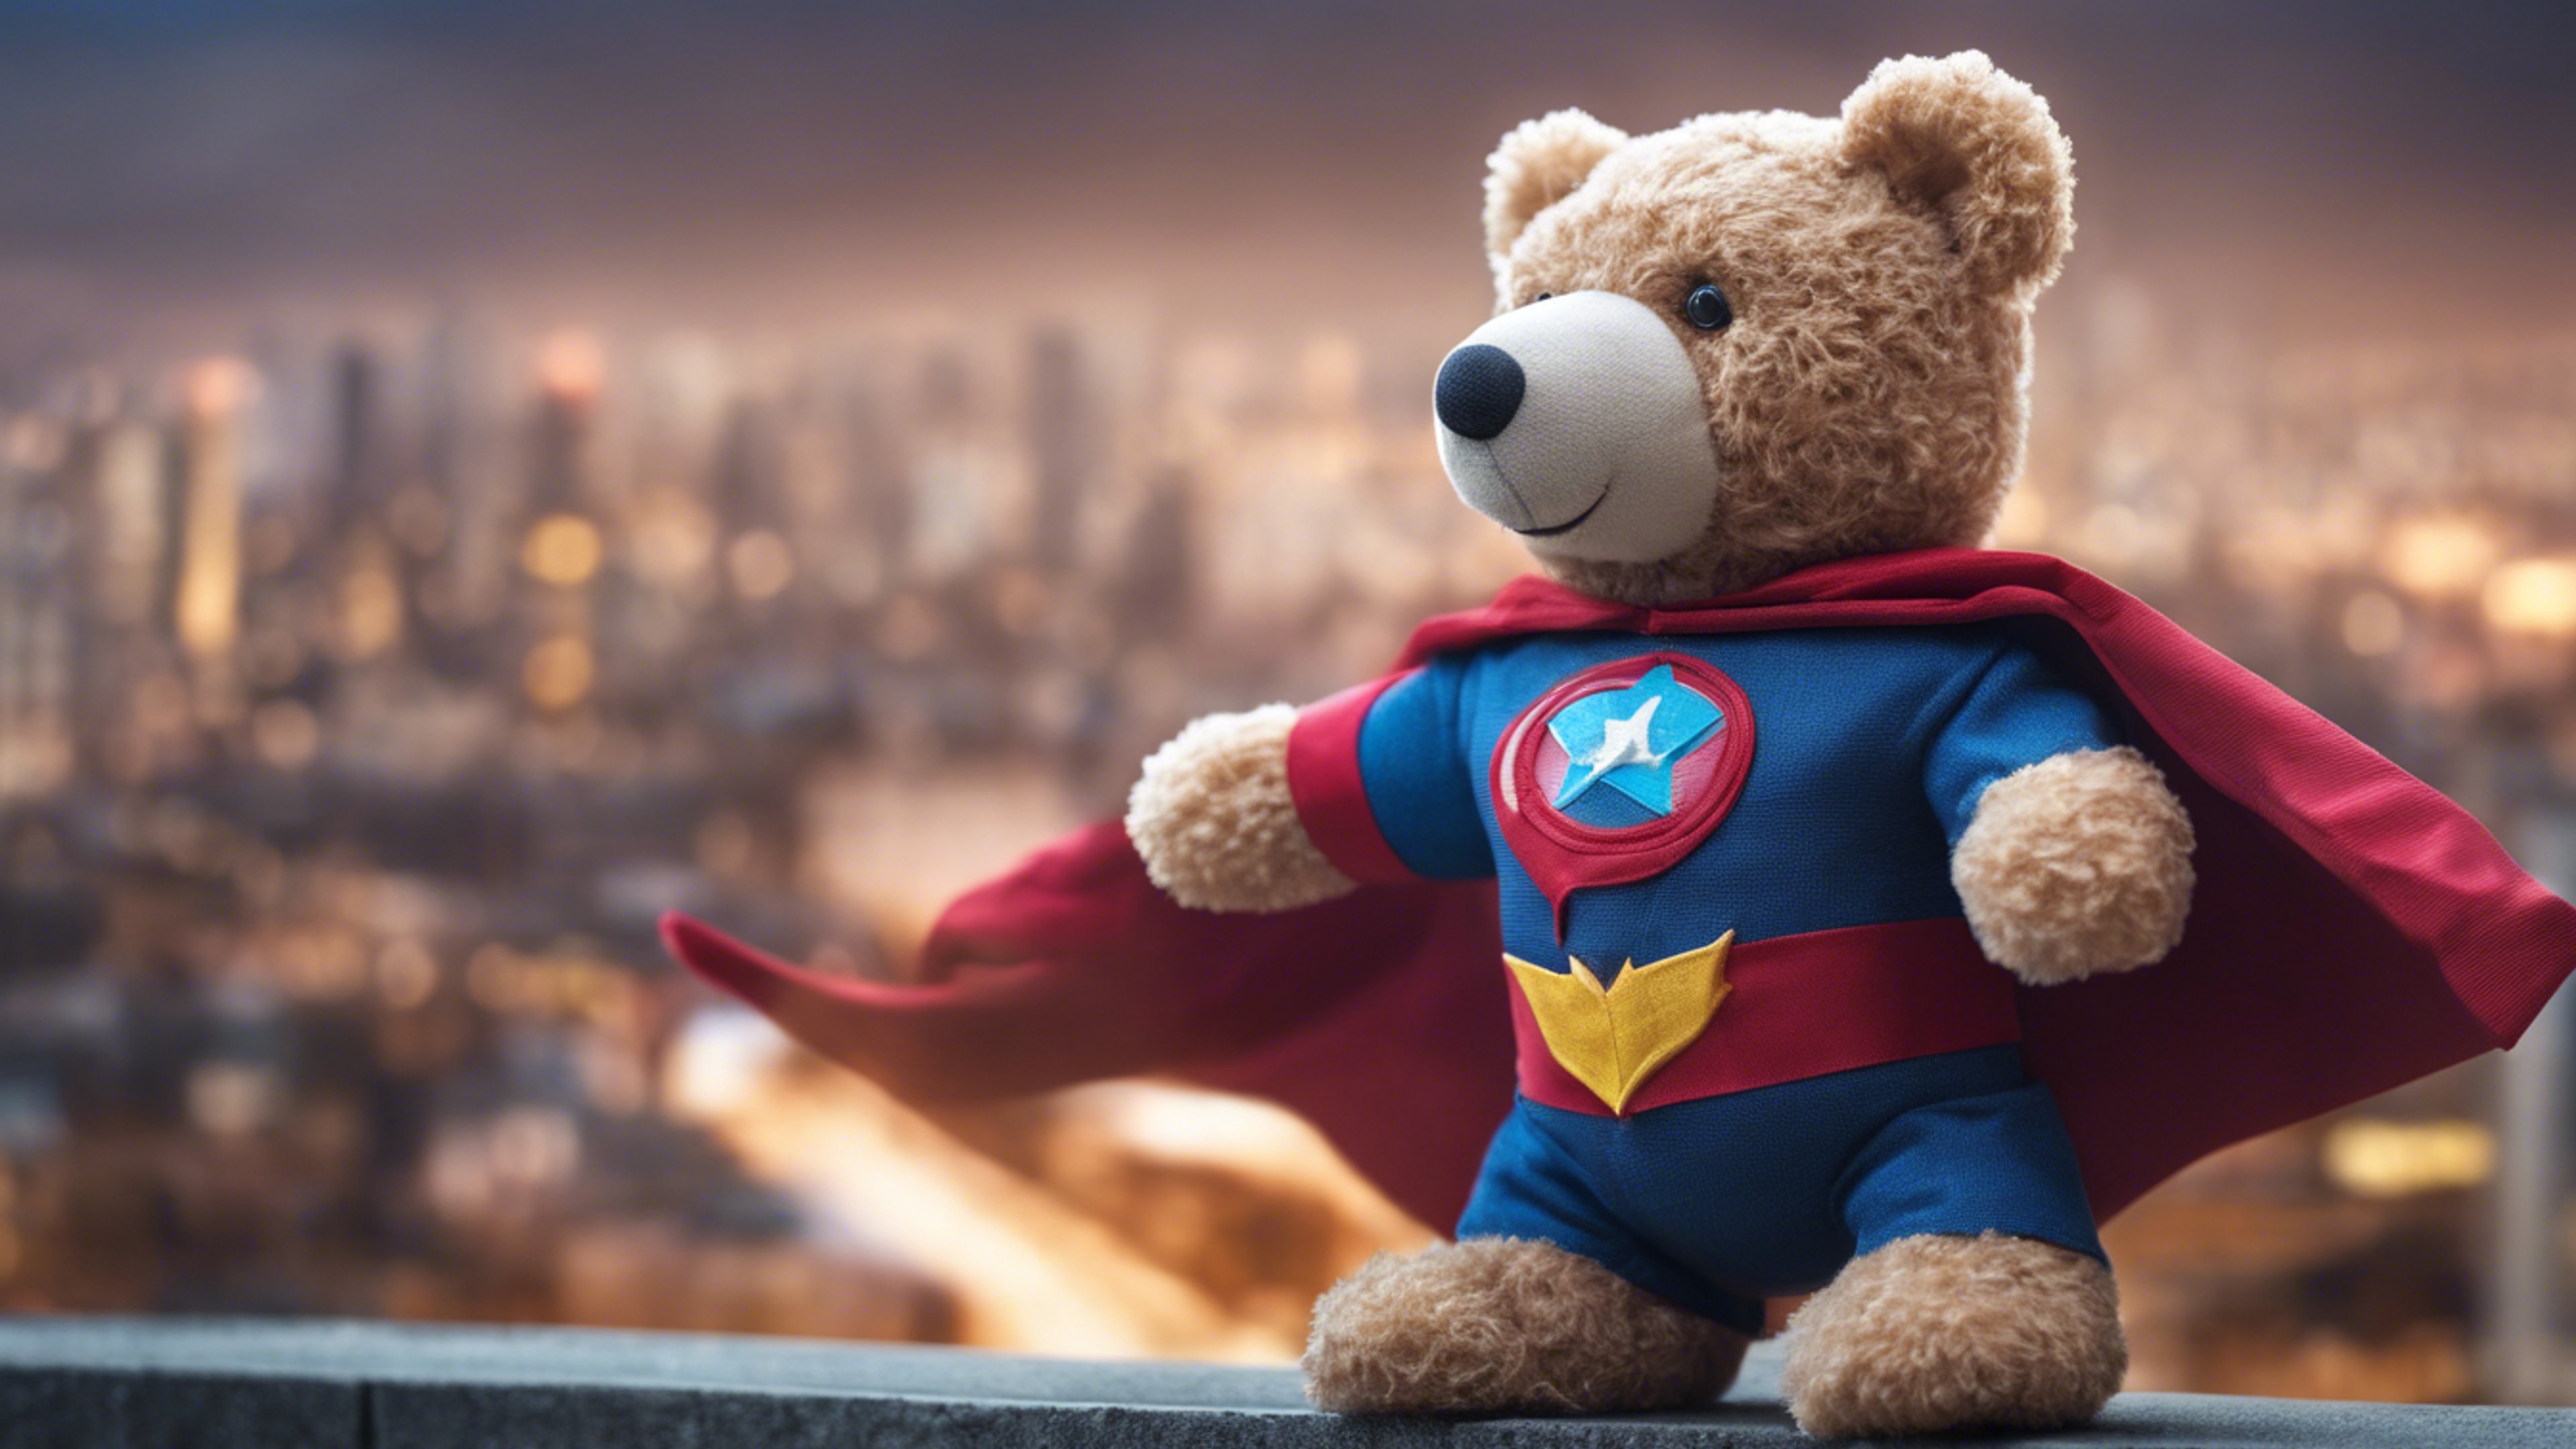 A teddy bear dressed as a superhero, flying against a cityscape backdrop.壁紙[ad961830169c4aee84e3]